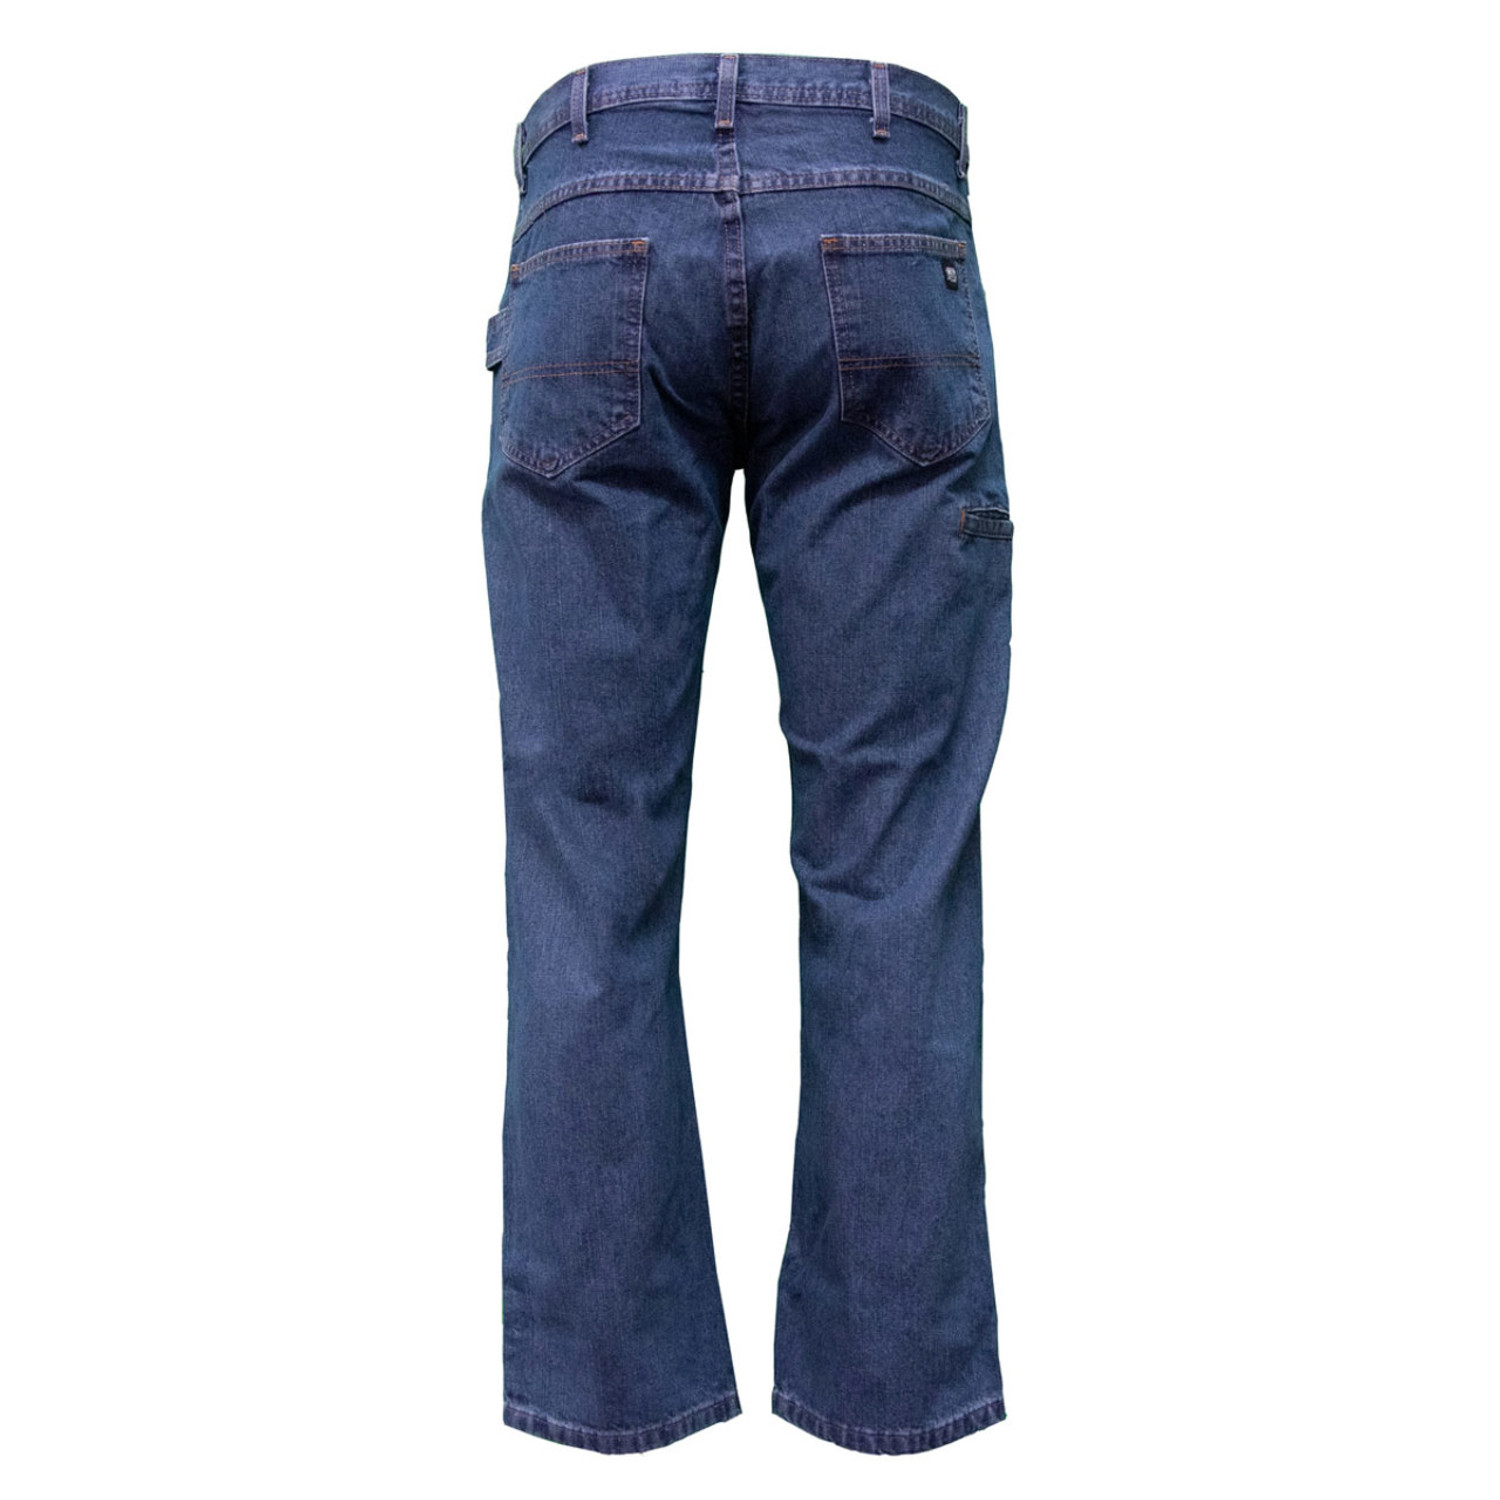 KEY Men's Traditional Fit 5-Pocket Enzyme Wash Jean